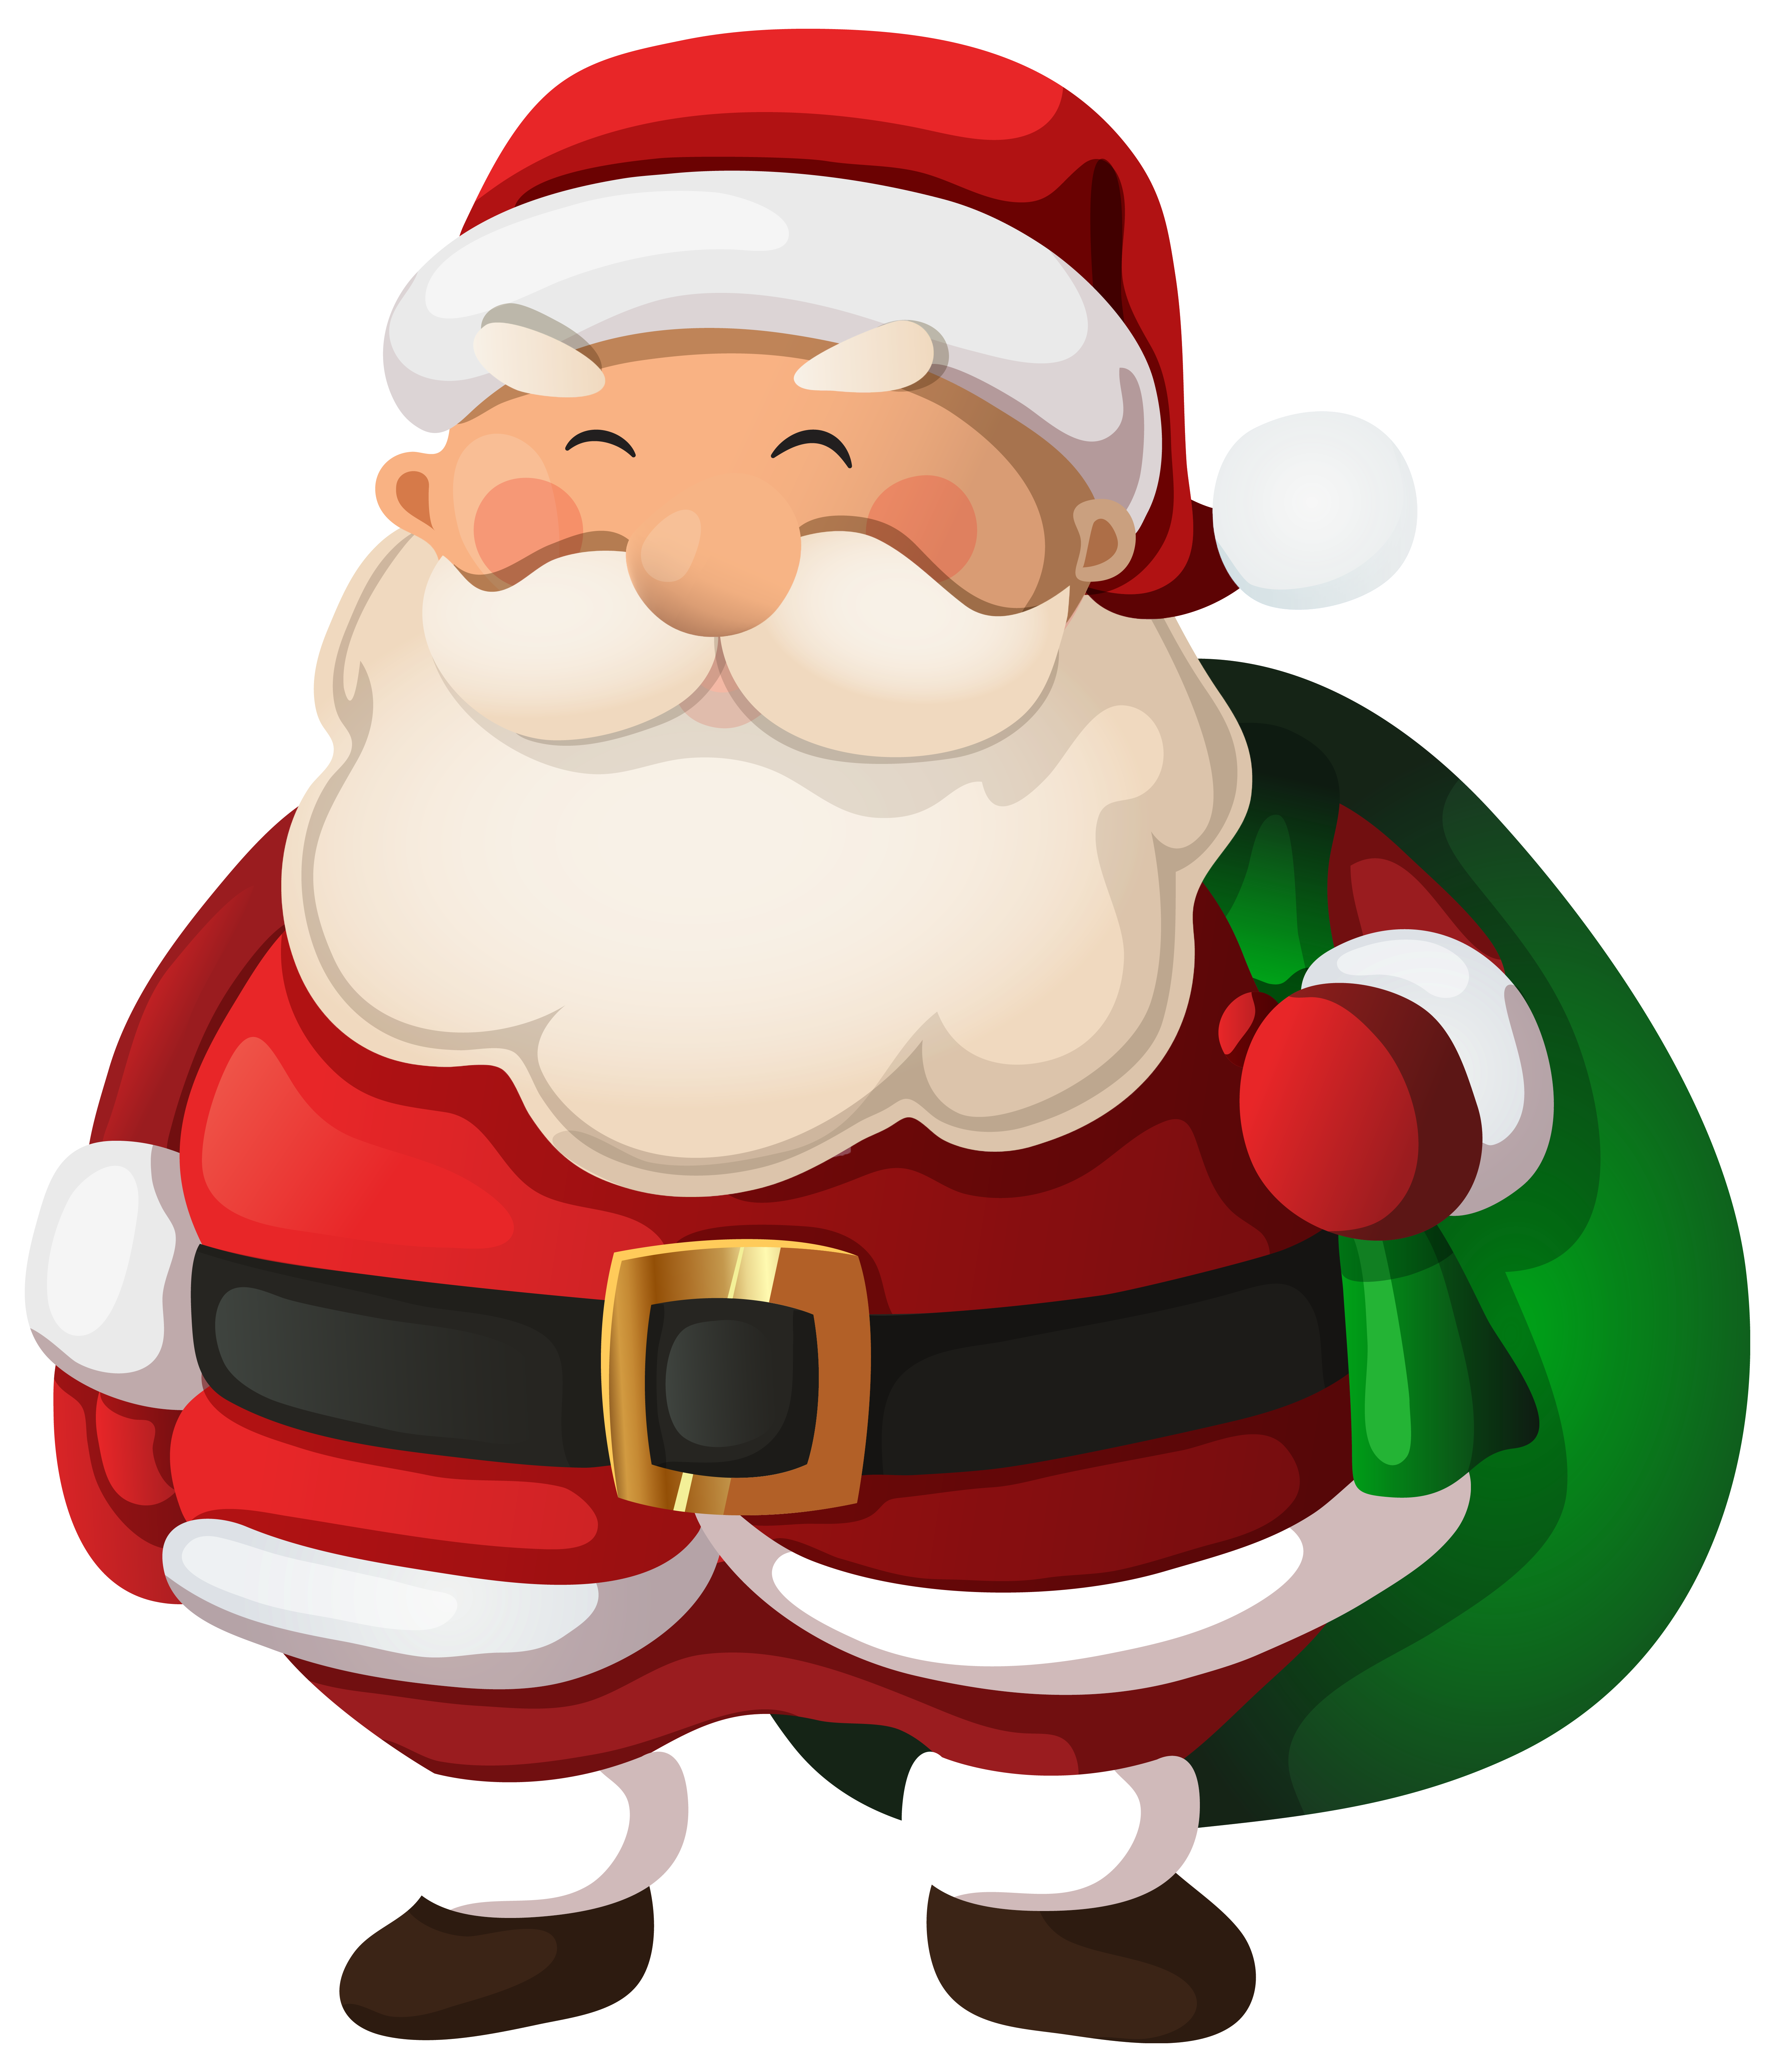 Free Santa Clipart Png, Download Free Santa Clipart Png png images